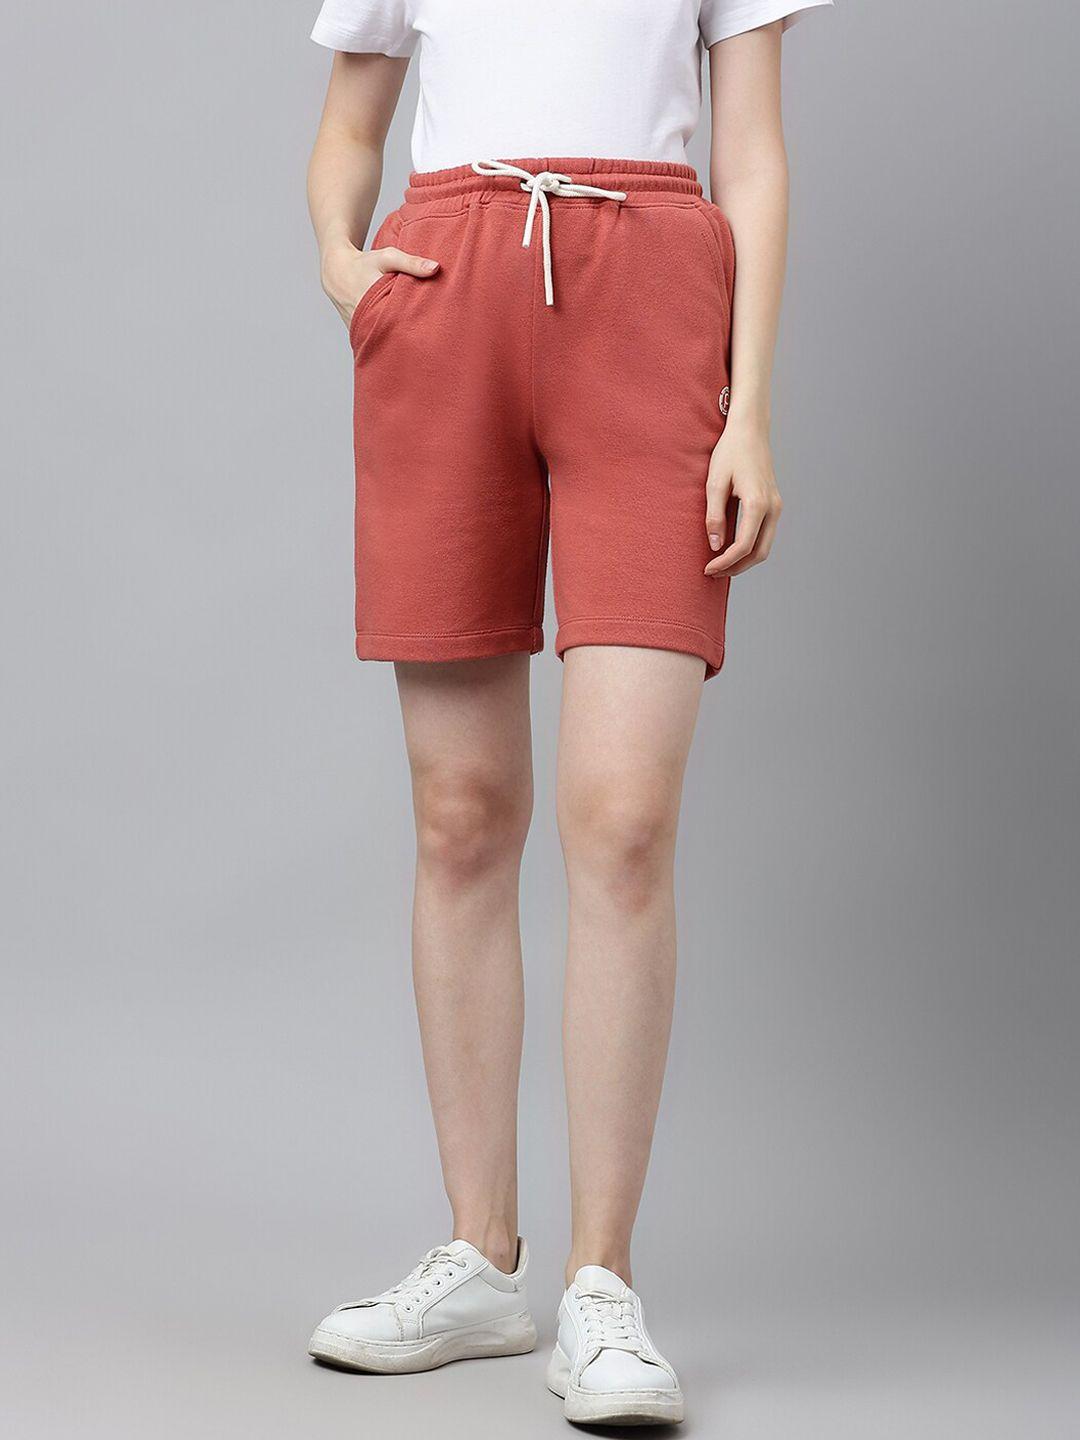 pritla women rust red cotton shorts